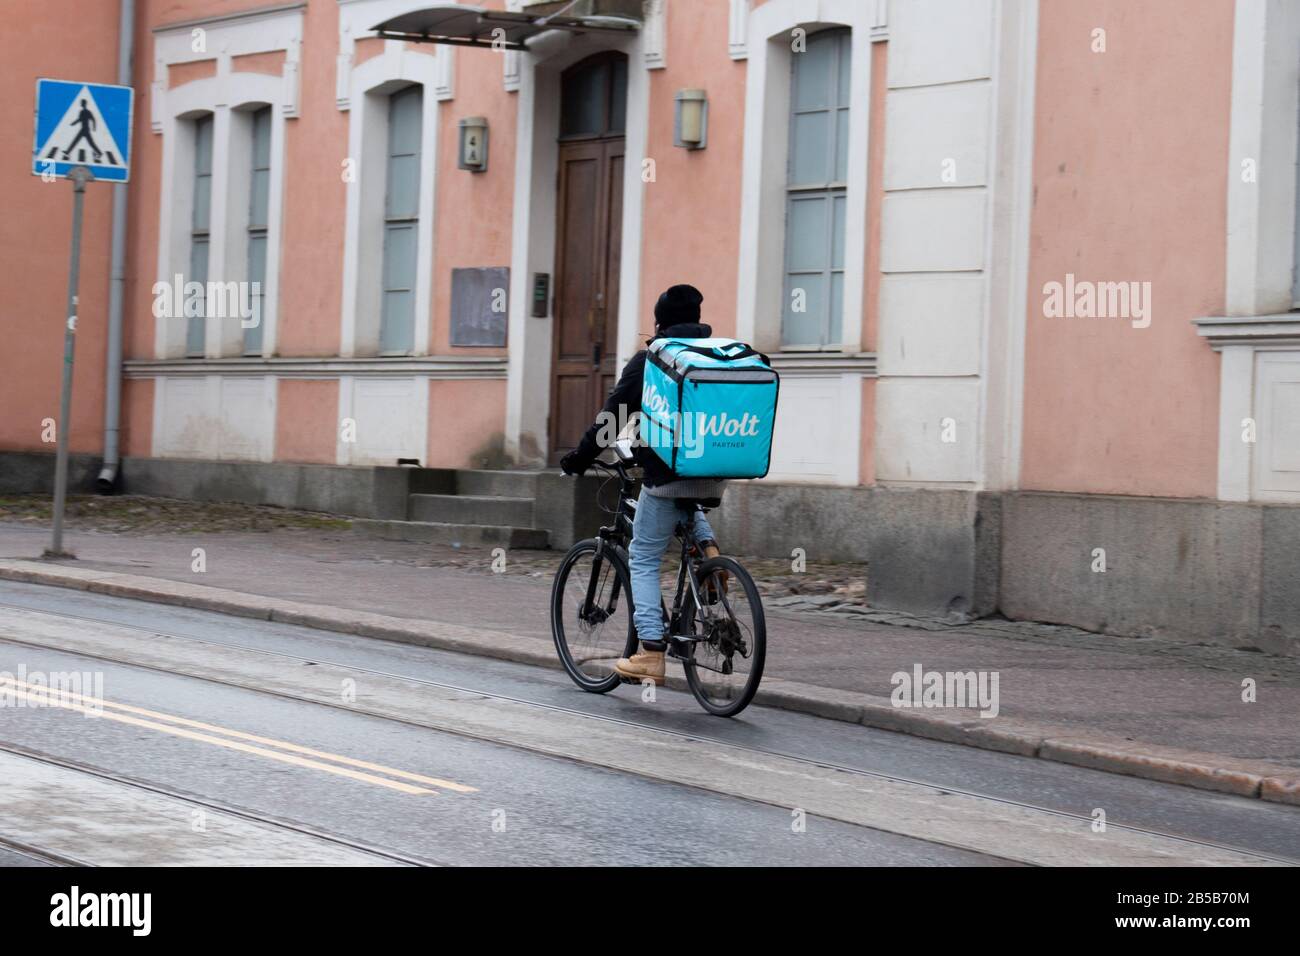 Helsinki, Finland - 3 March 2020: Wolt Partner bike delivery man on street, Illustrative Editorial Stock Photo